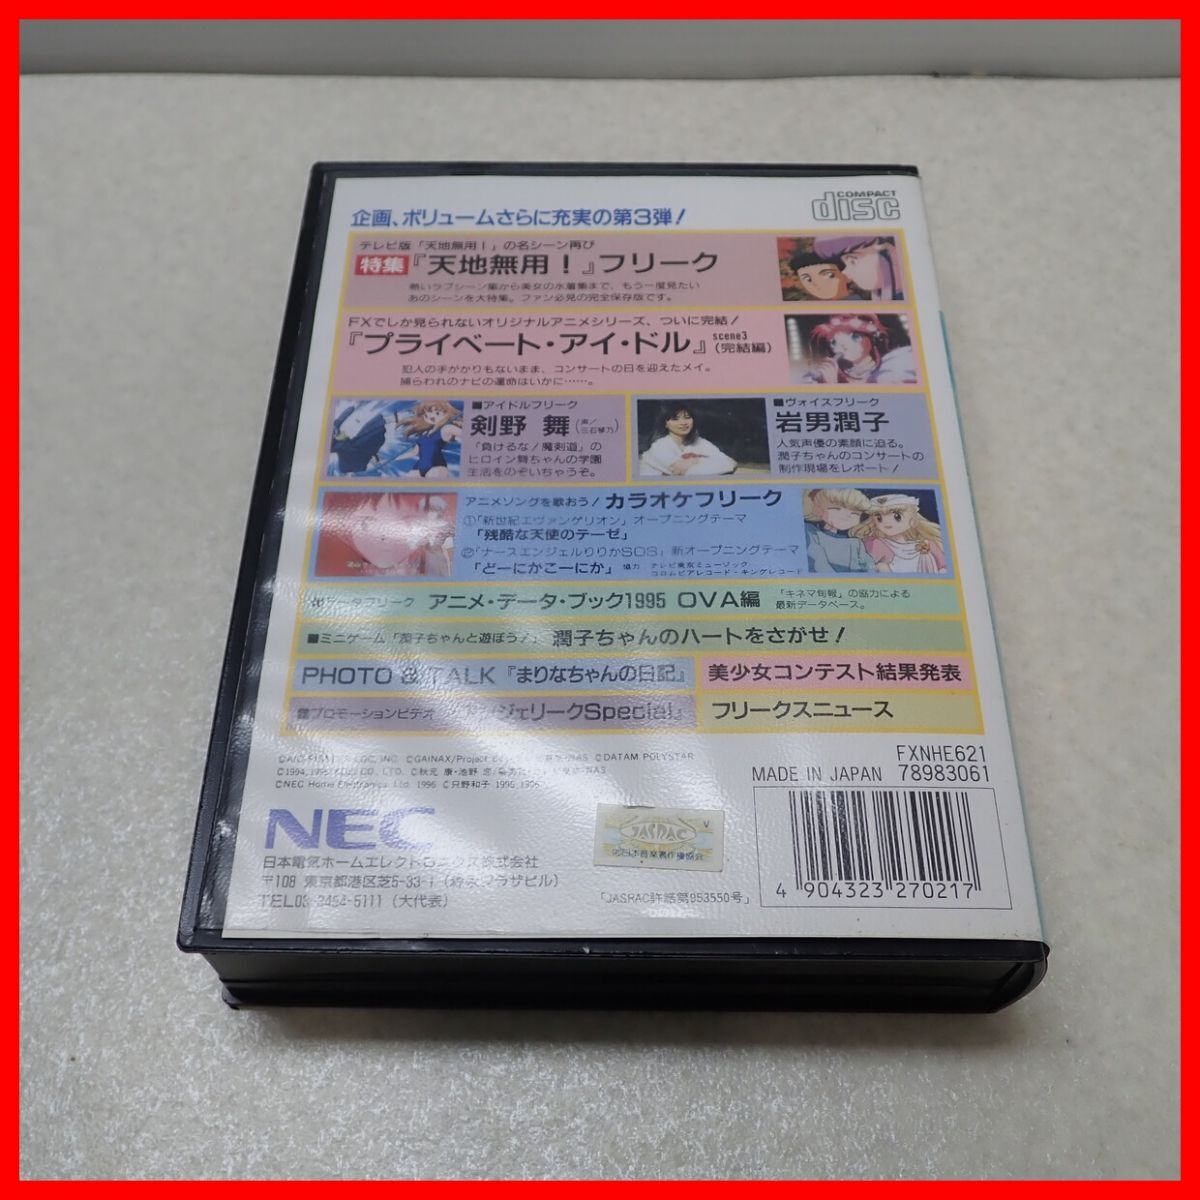 * operation guarantee goods PC-FX animefreak FX anime freak sFX Vol.3 NEC Japan electric Home electronics box opinion attaching [10